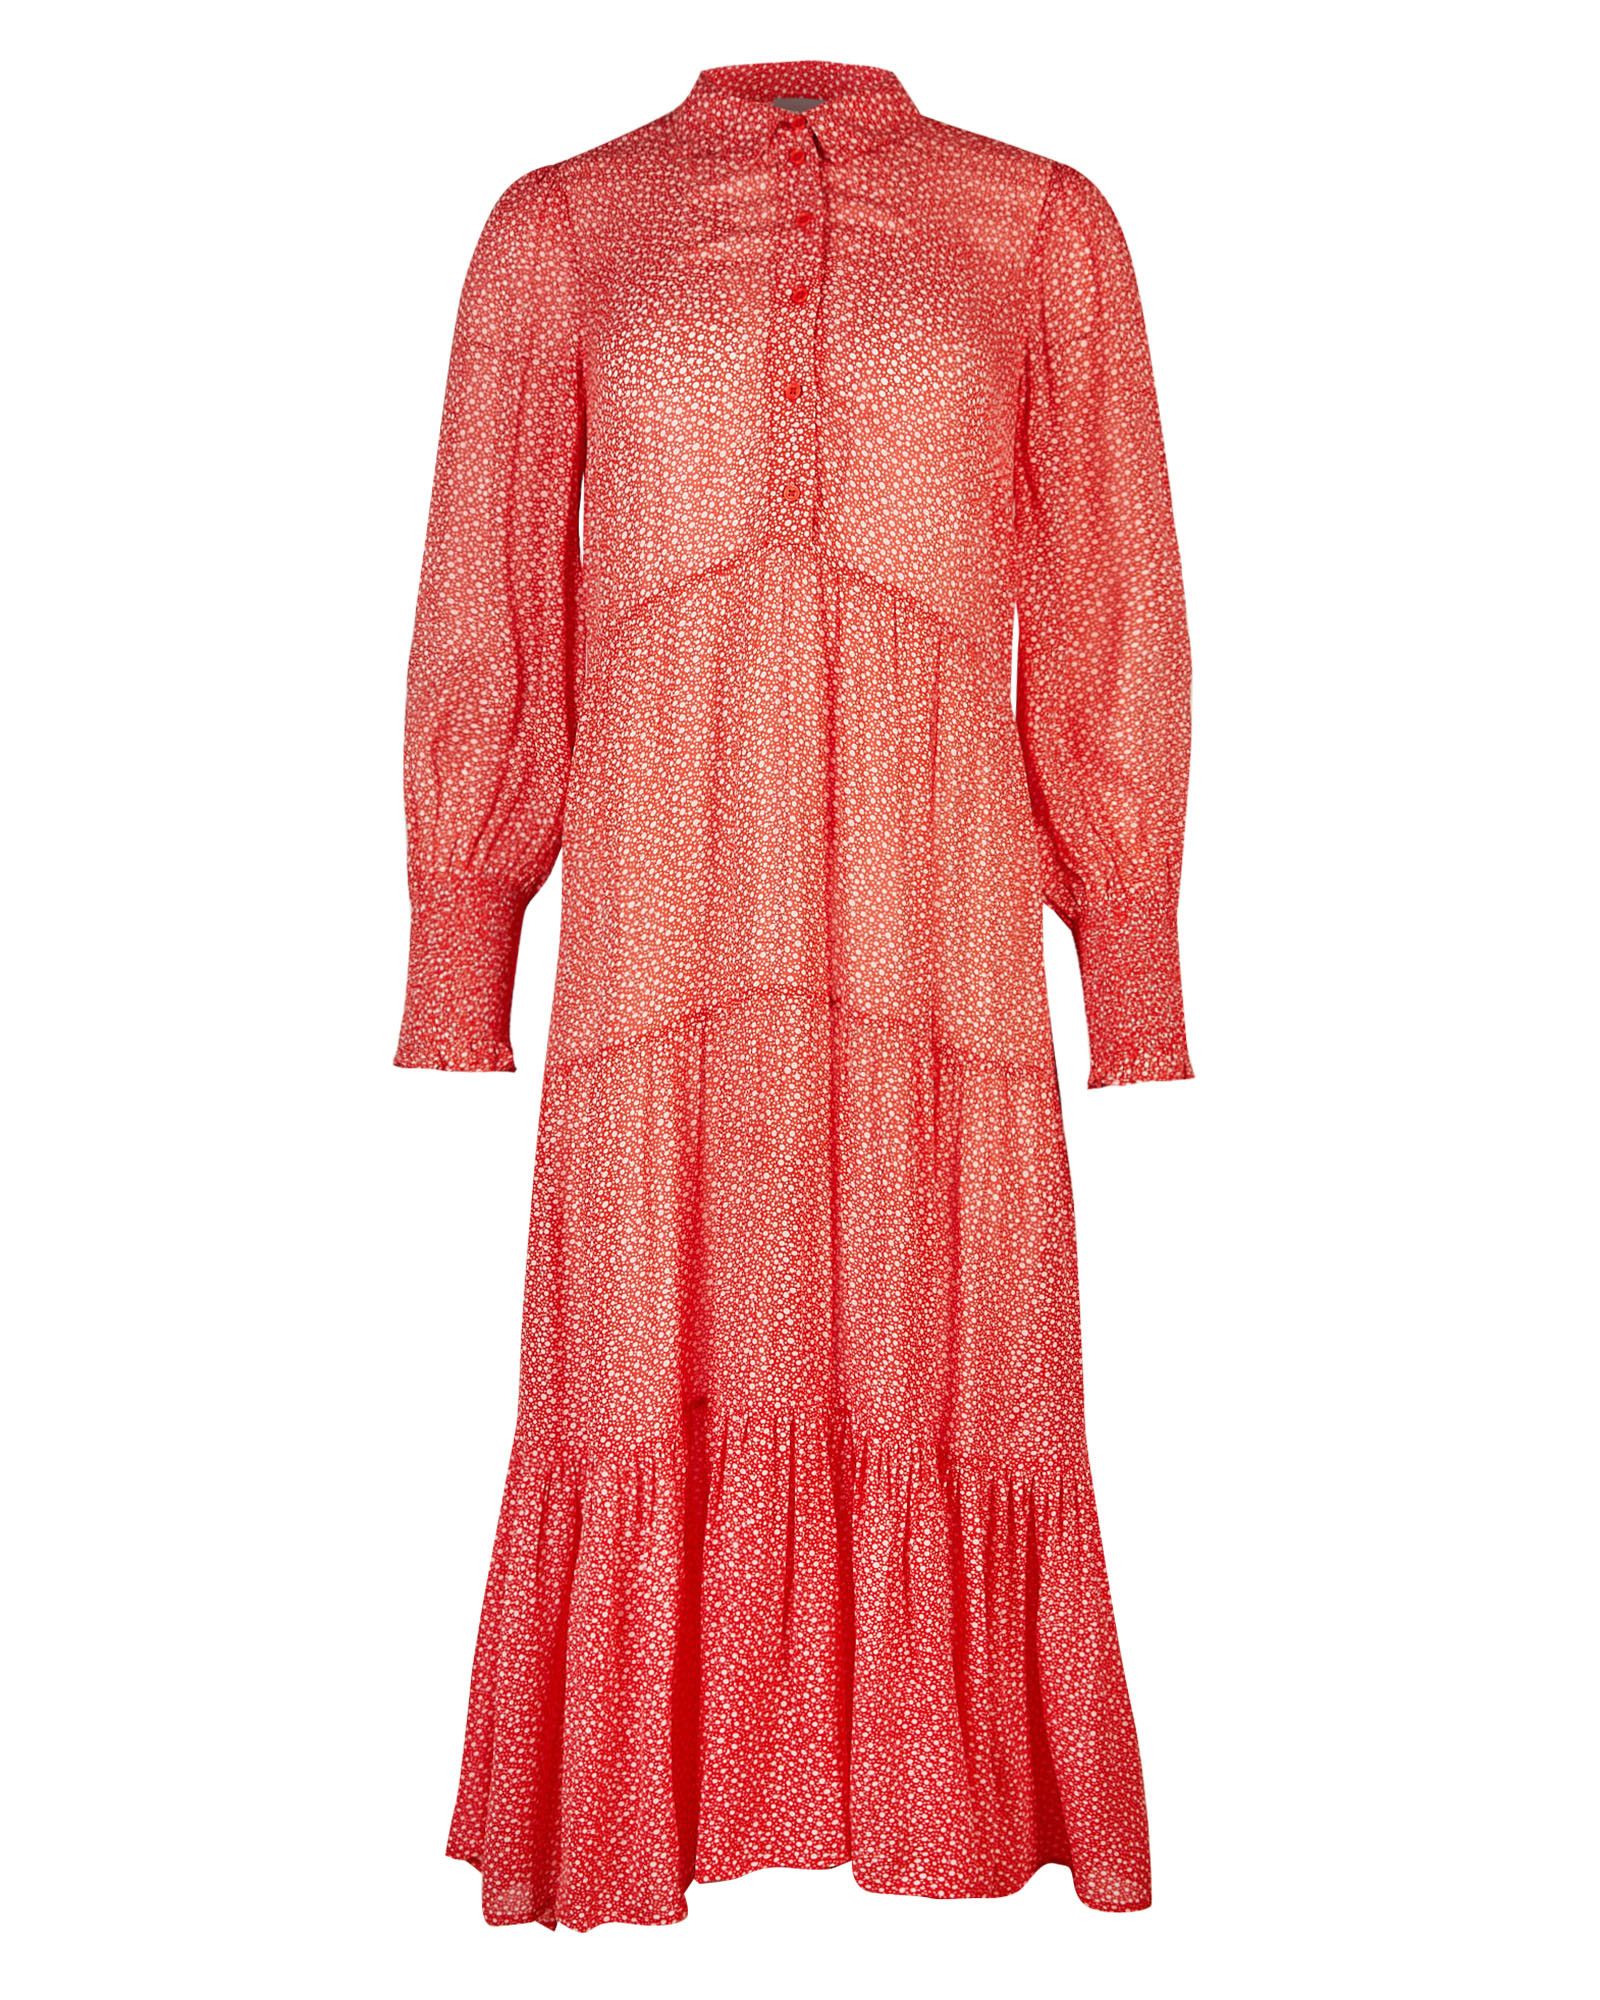 Joyful Polka Dot Red Tiered Shirt Midi Dress | Oliver Bonas